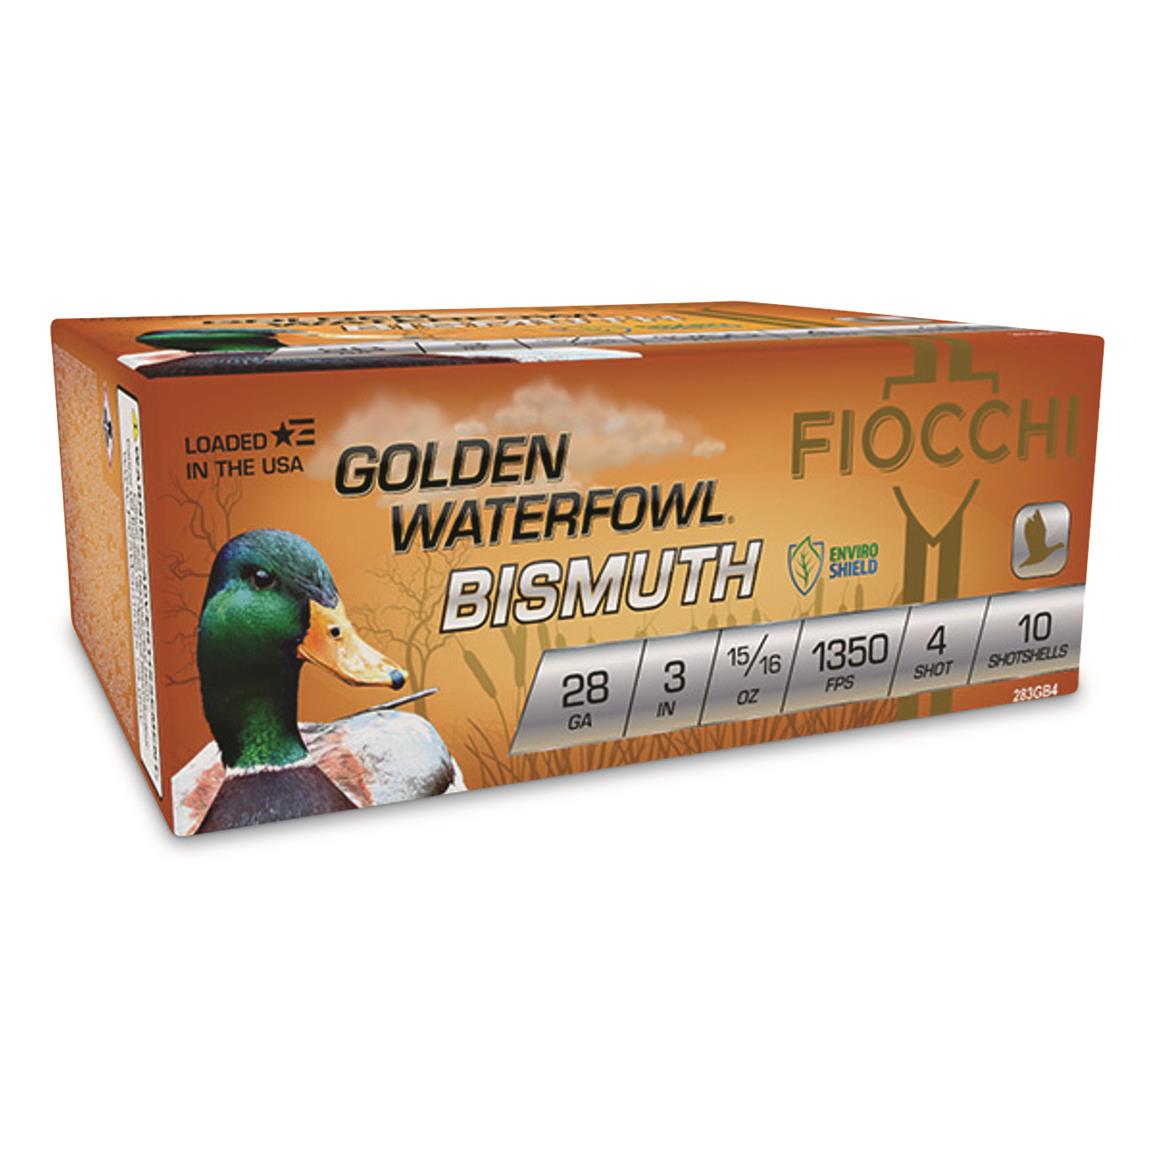 Fiocchi Golden Waterfowl Bismuth, 28 Gauge, 3", 15/16 oz., 10 Rounds